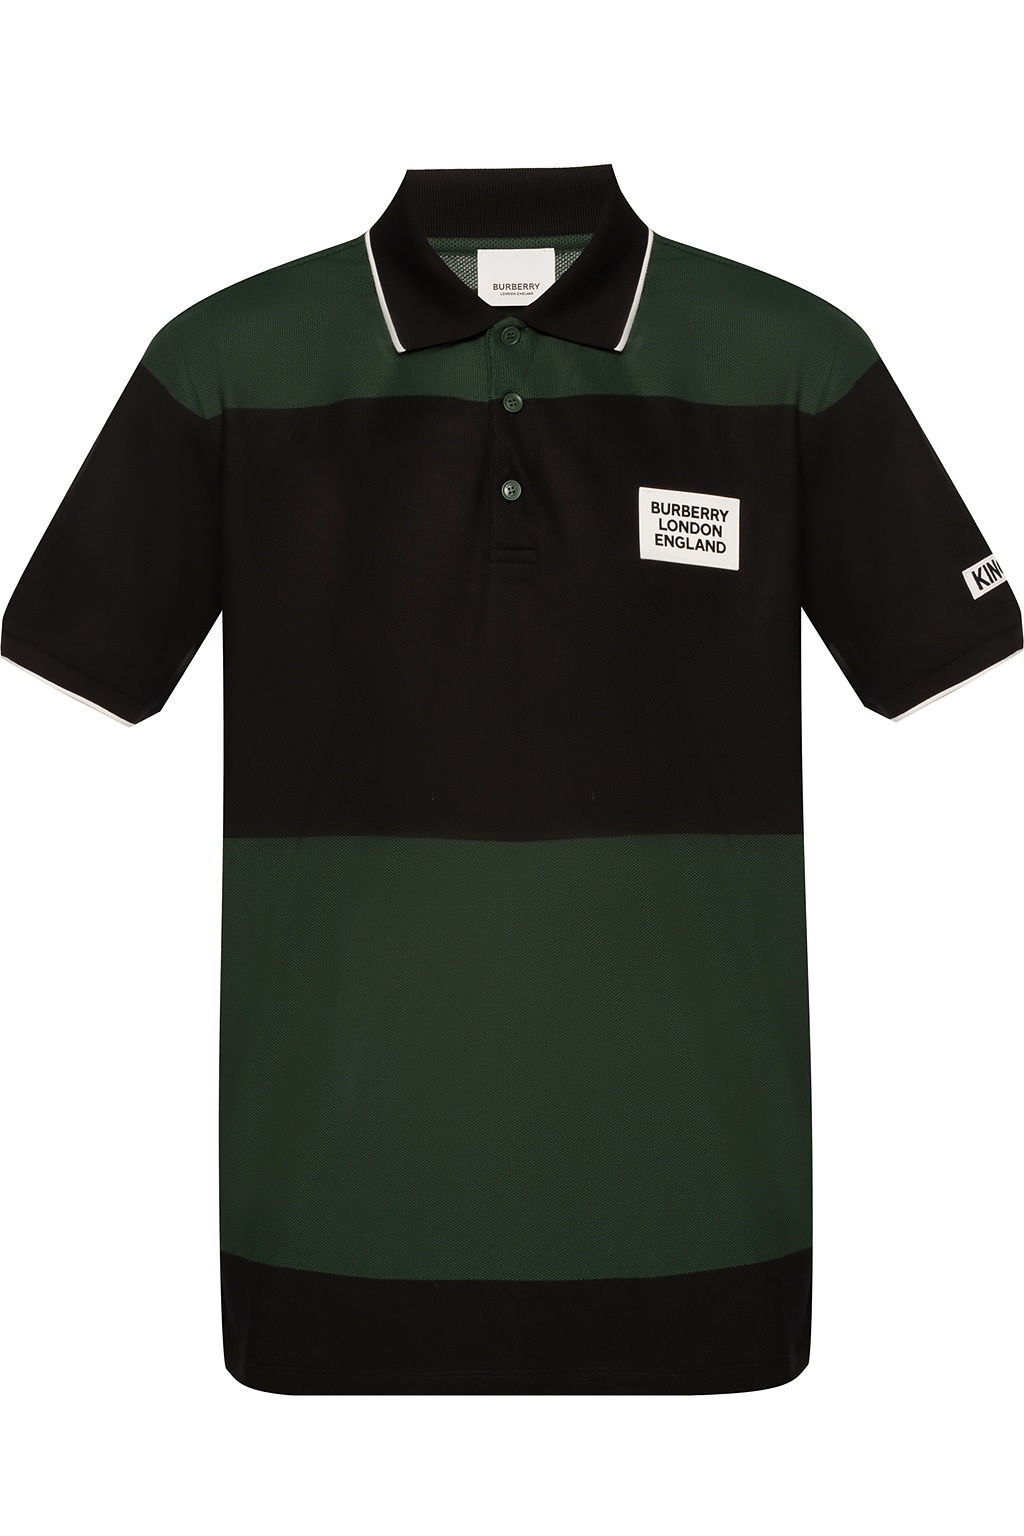 Burberry Polo shirt with logo | Men's Clothing | Vitkac